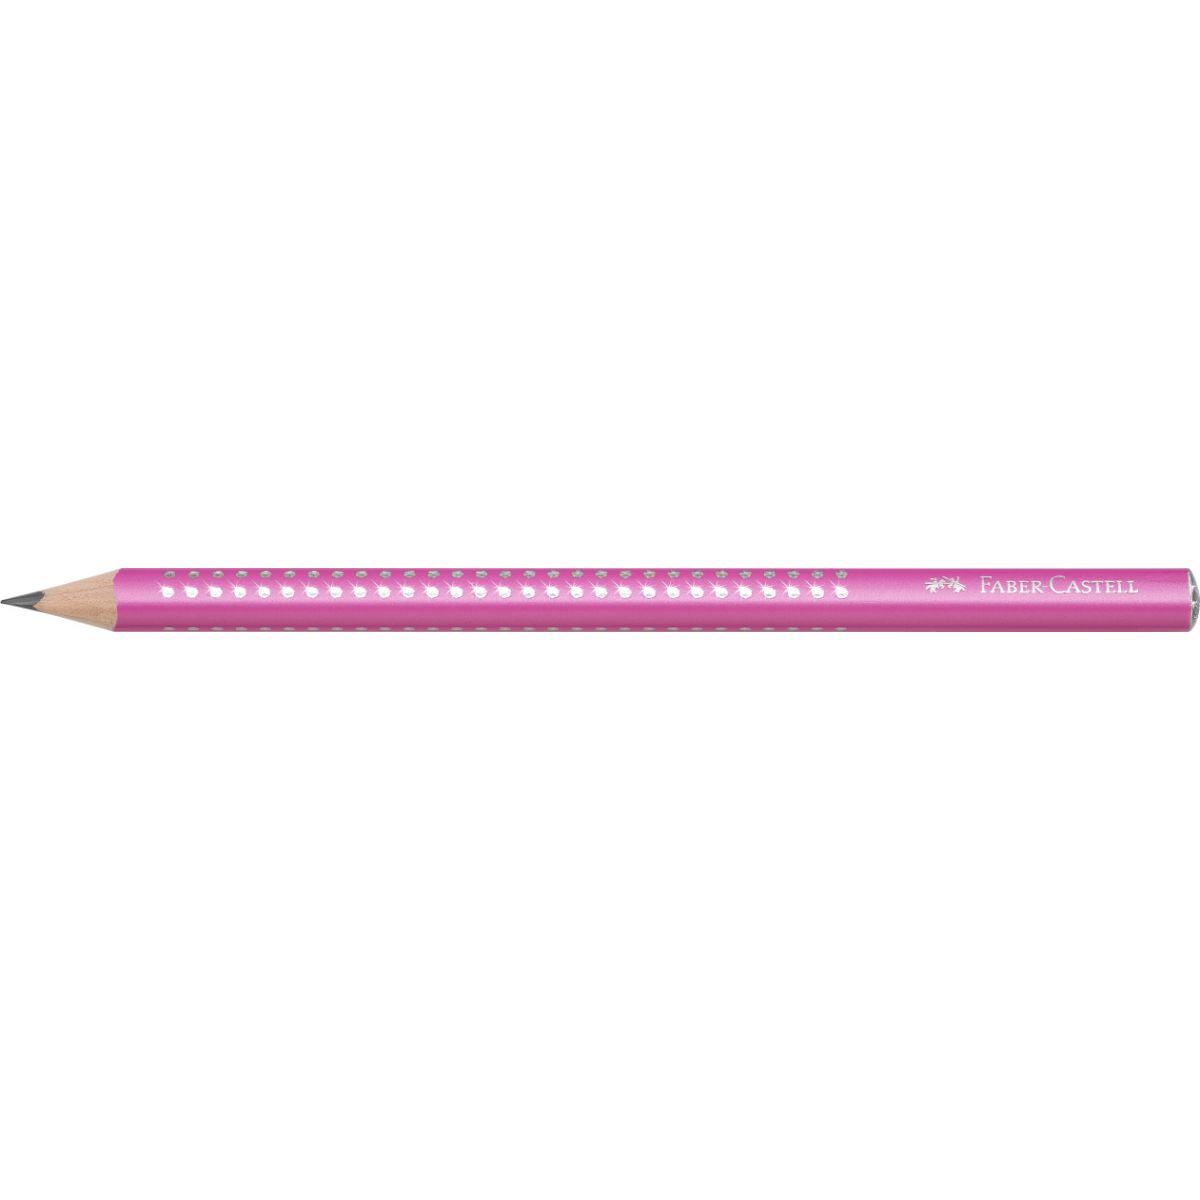 Graphite pencil Jumbo Sparkle pearl pink